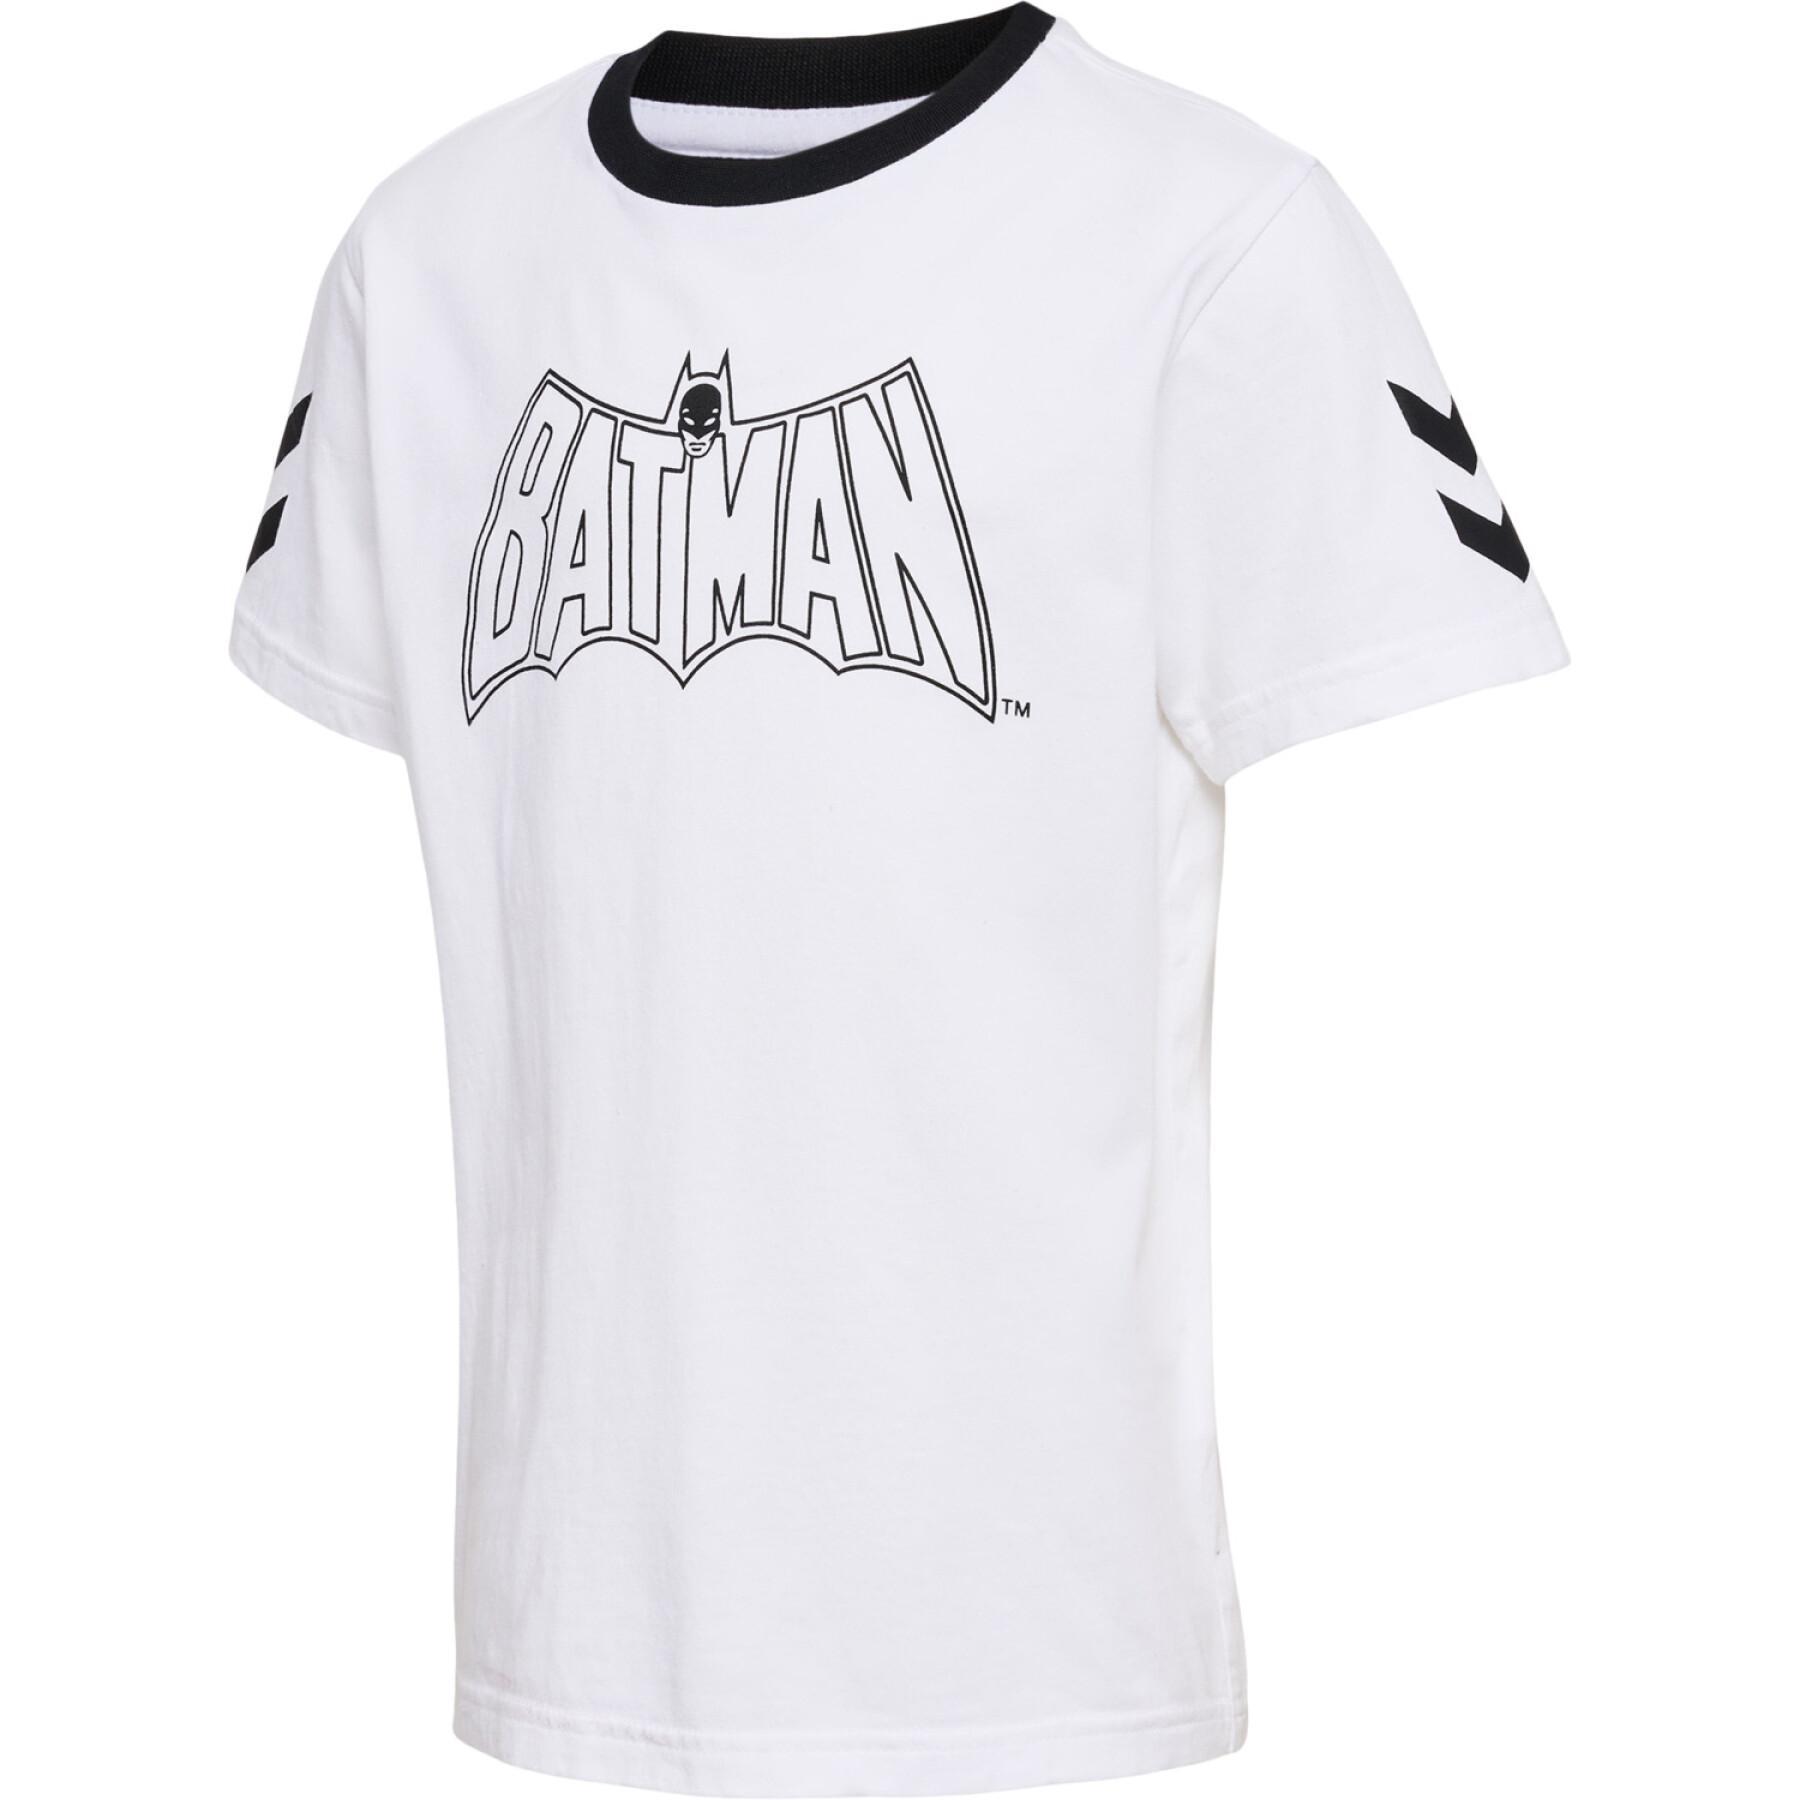 Camiseta de manga corta para niños Hummel Batman